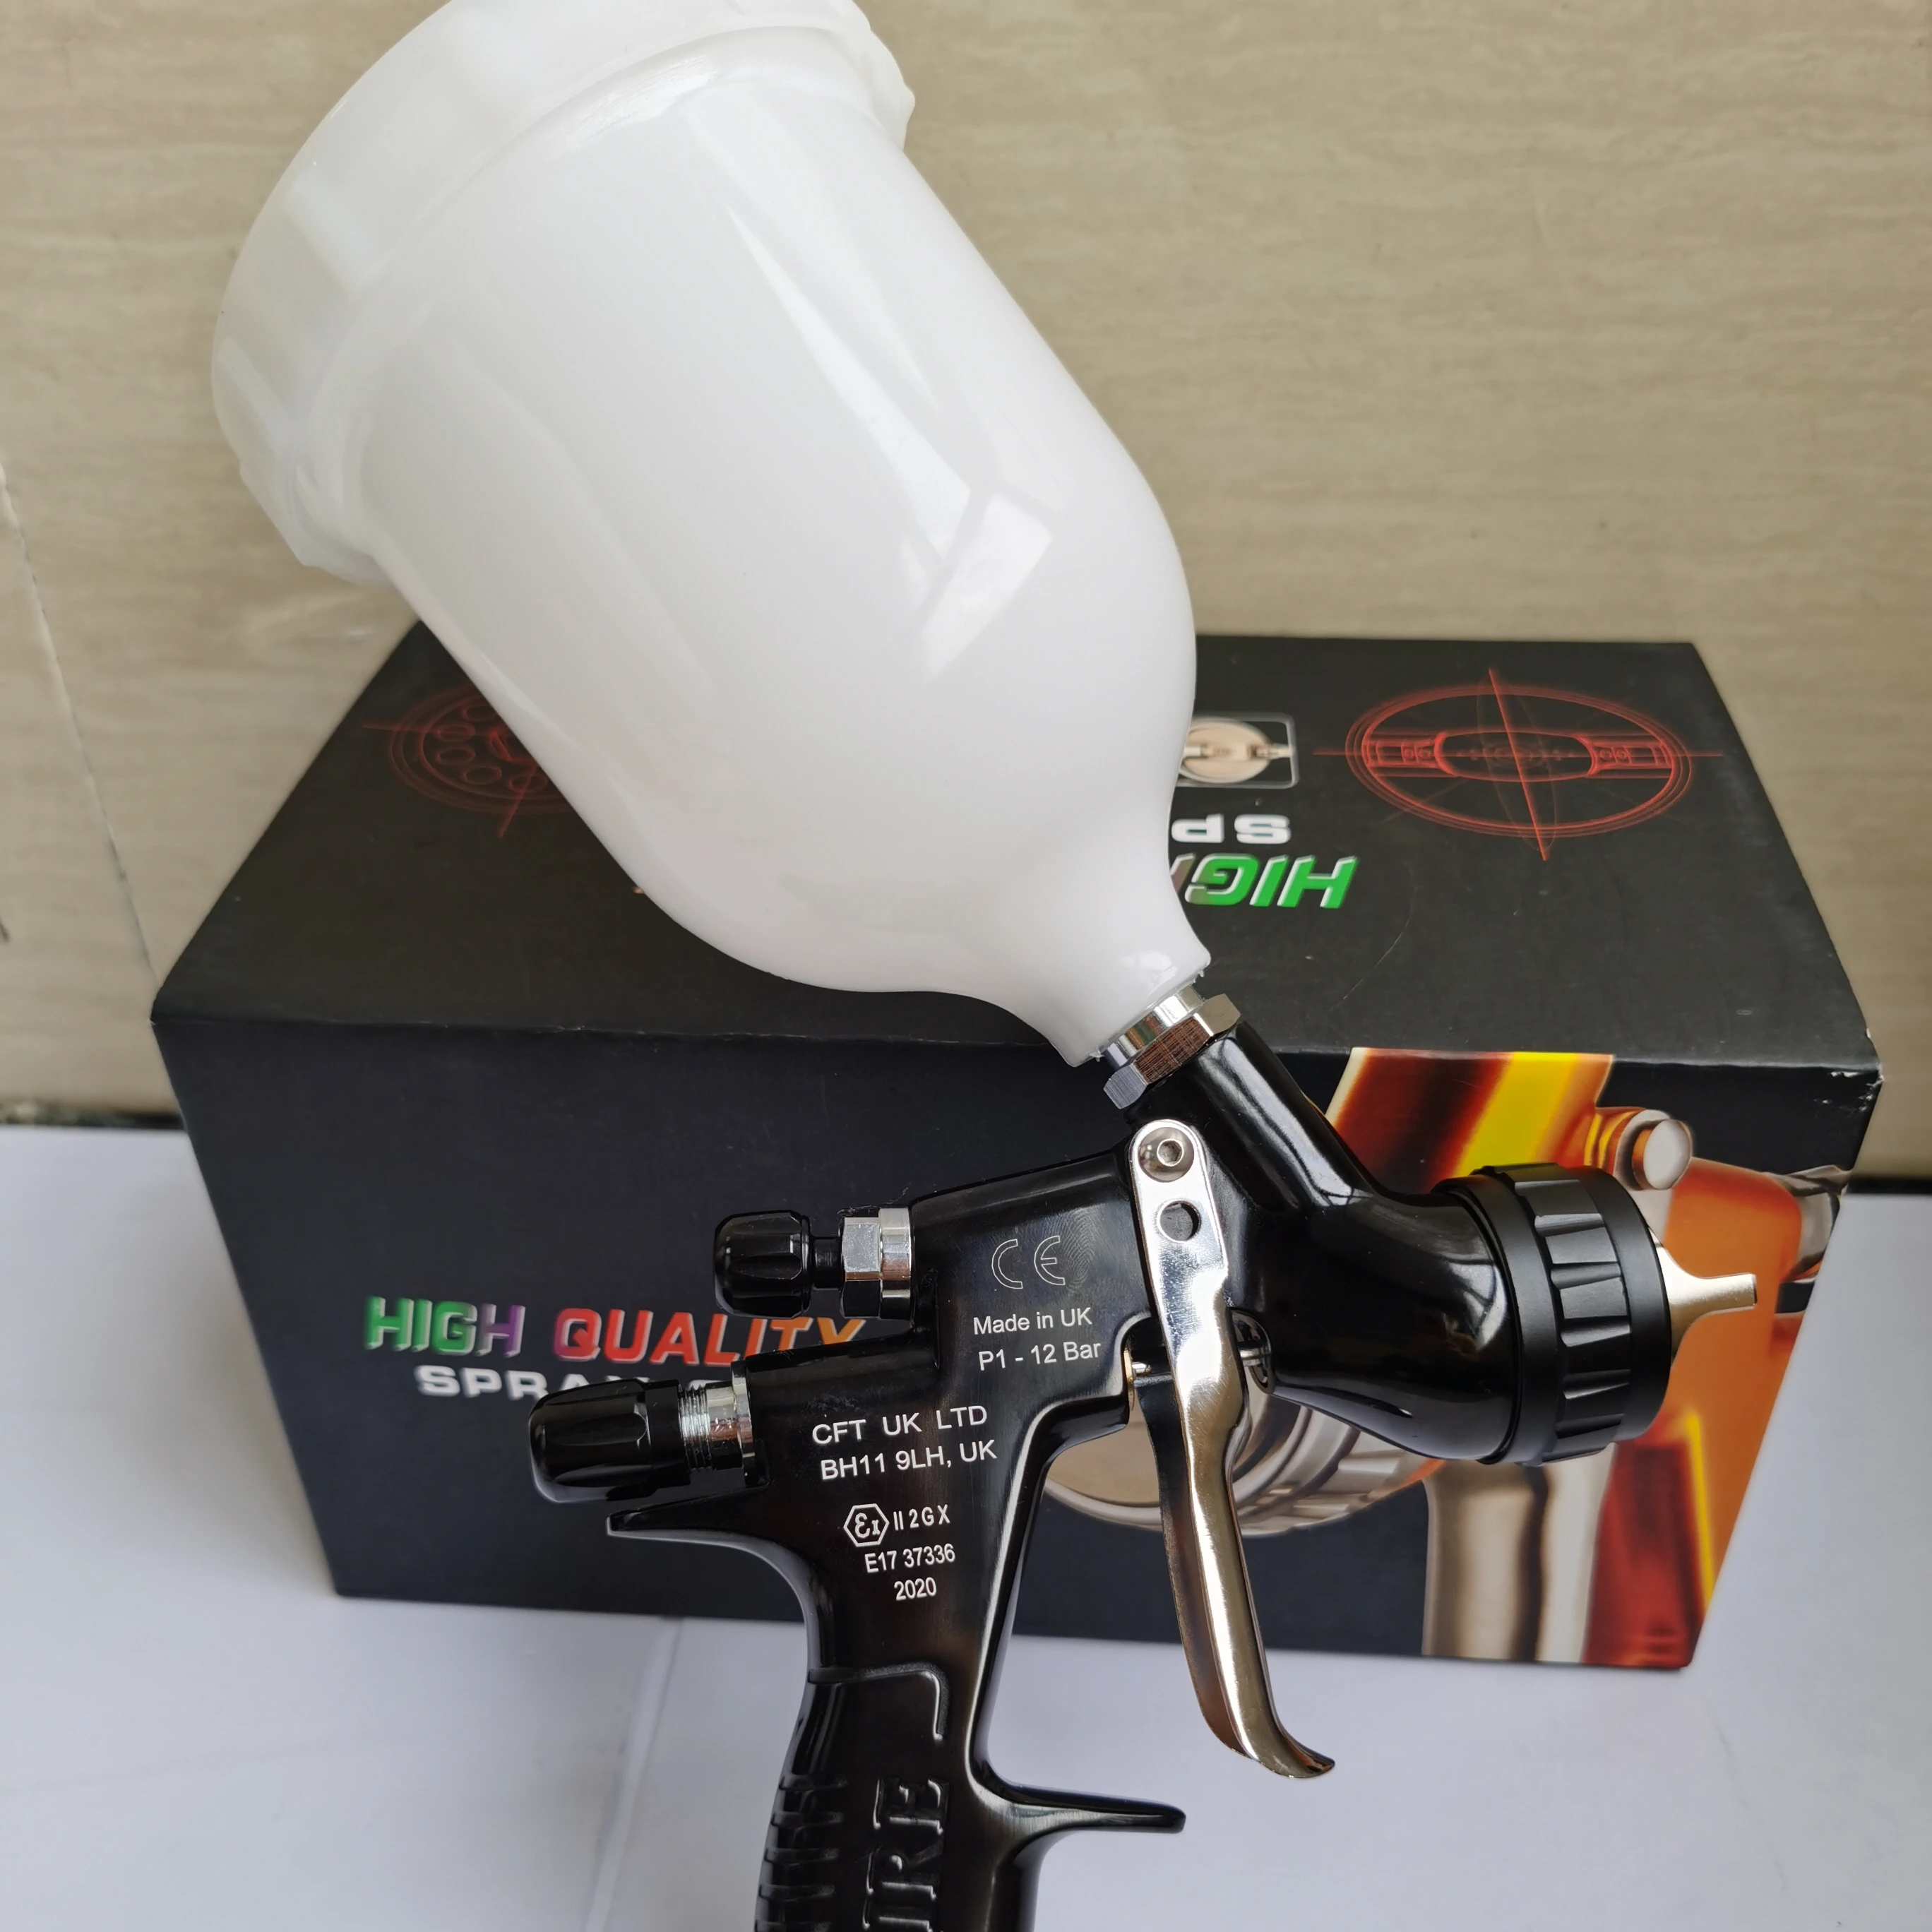 

HYFIRE Limited Edition GTI PRO LITE TE20 Gravity Spray Gun Clear Coat 1.3mm spray paint tips